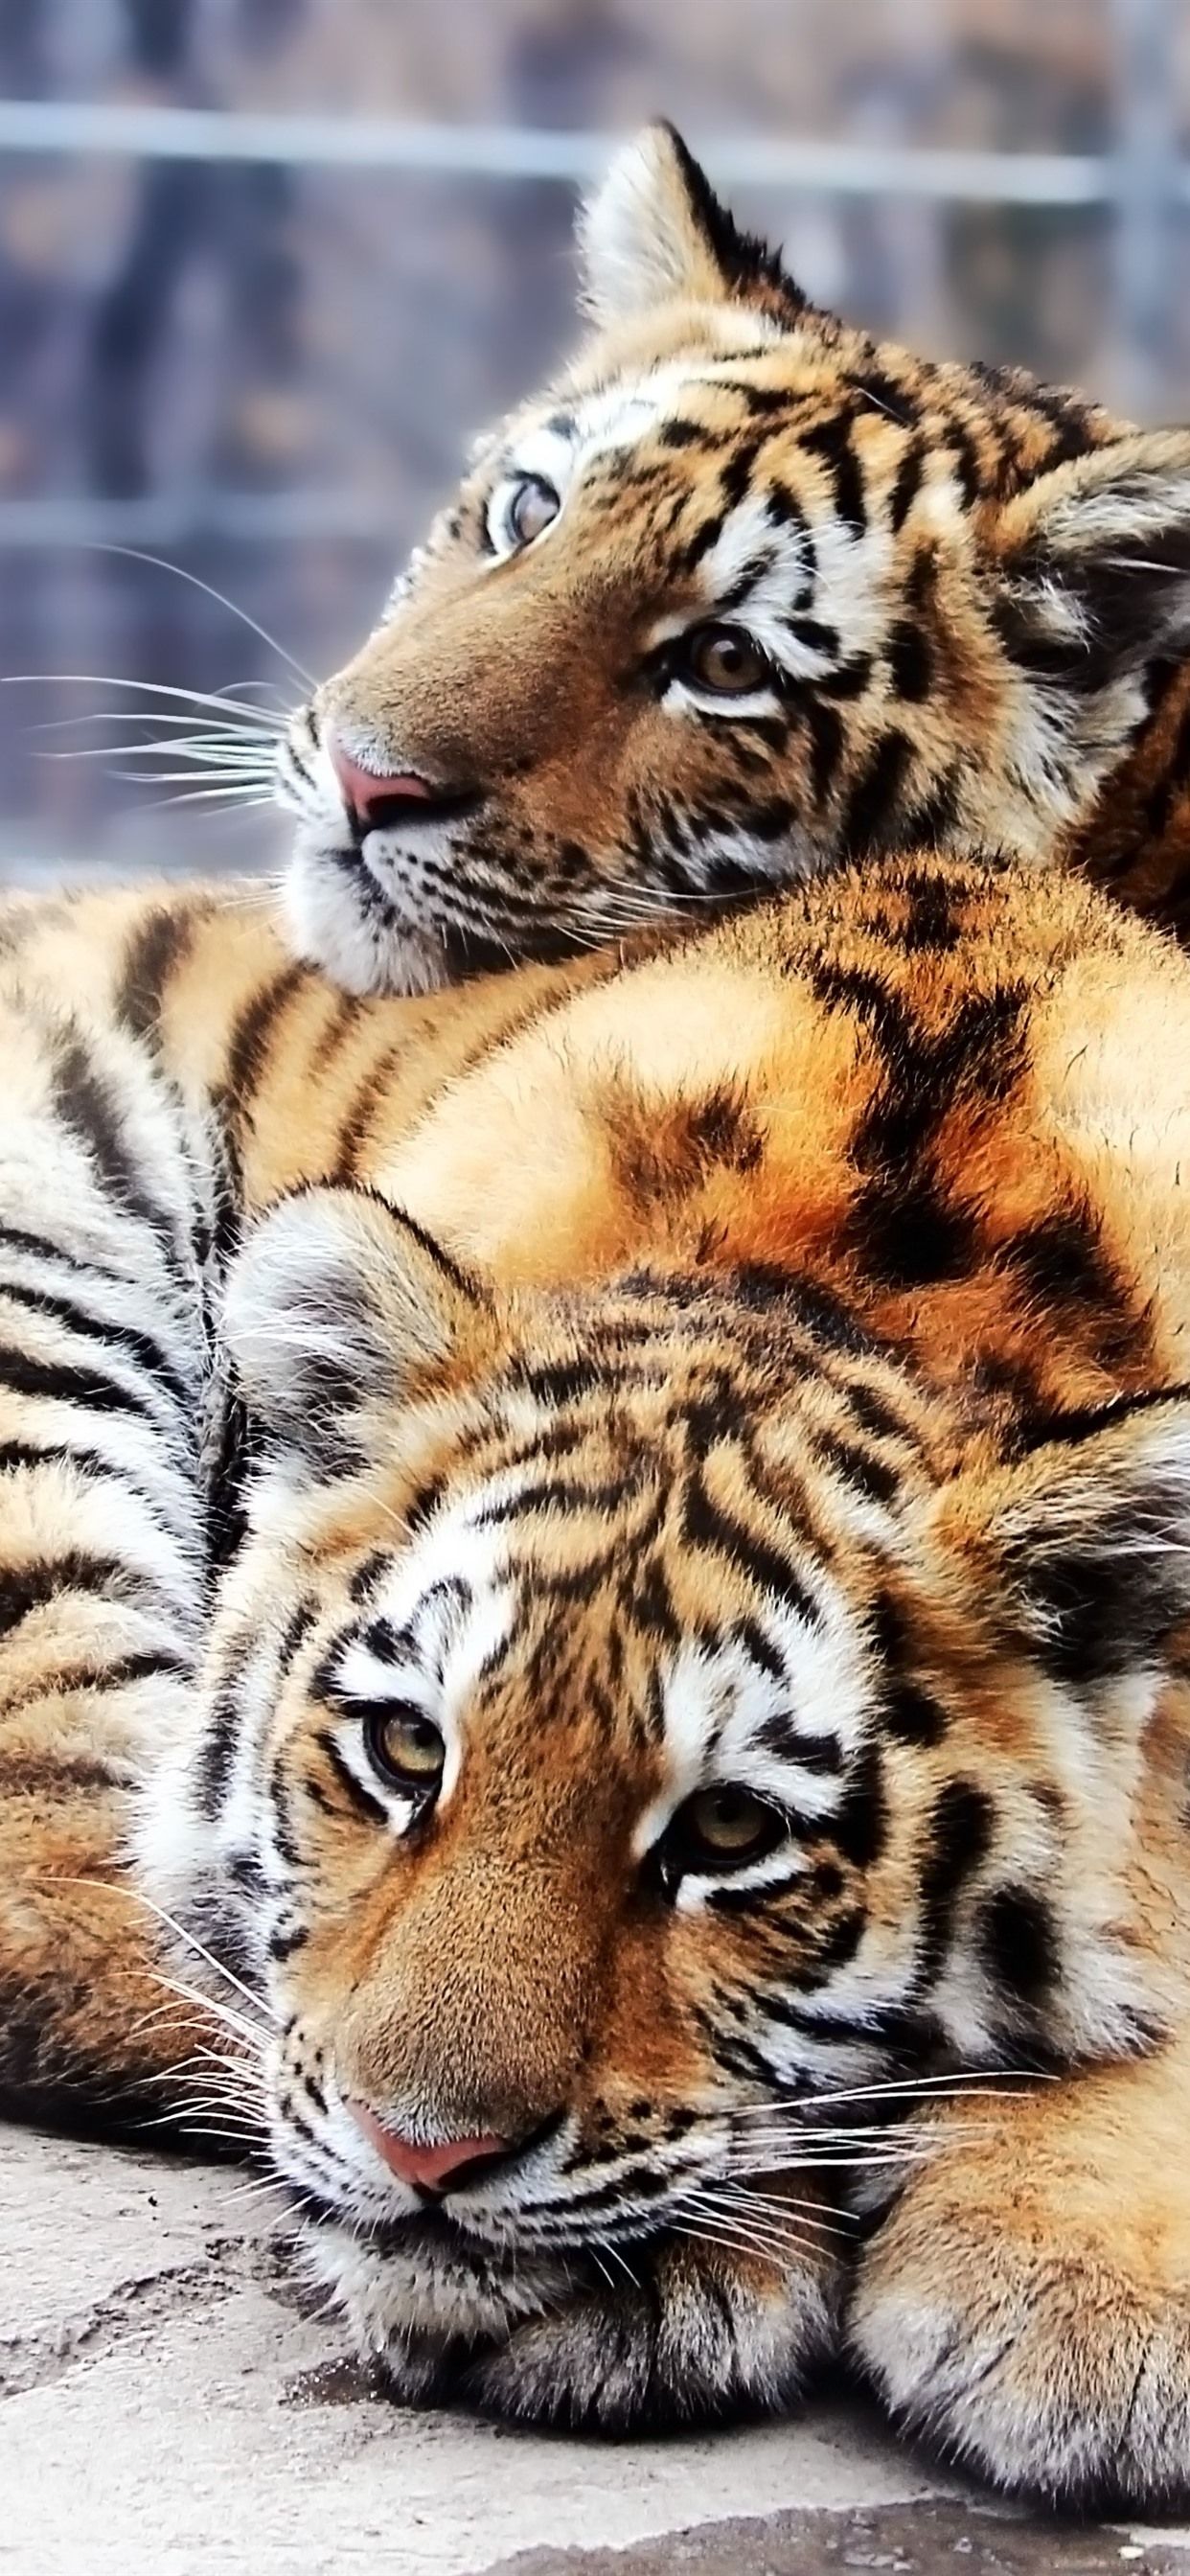 Two Cute Tigers 1242x2688 IPhone 11 Pro XS Max Wallpaper